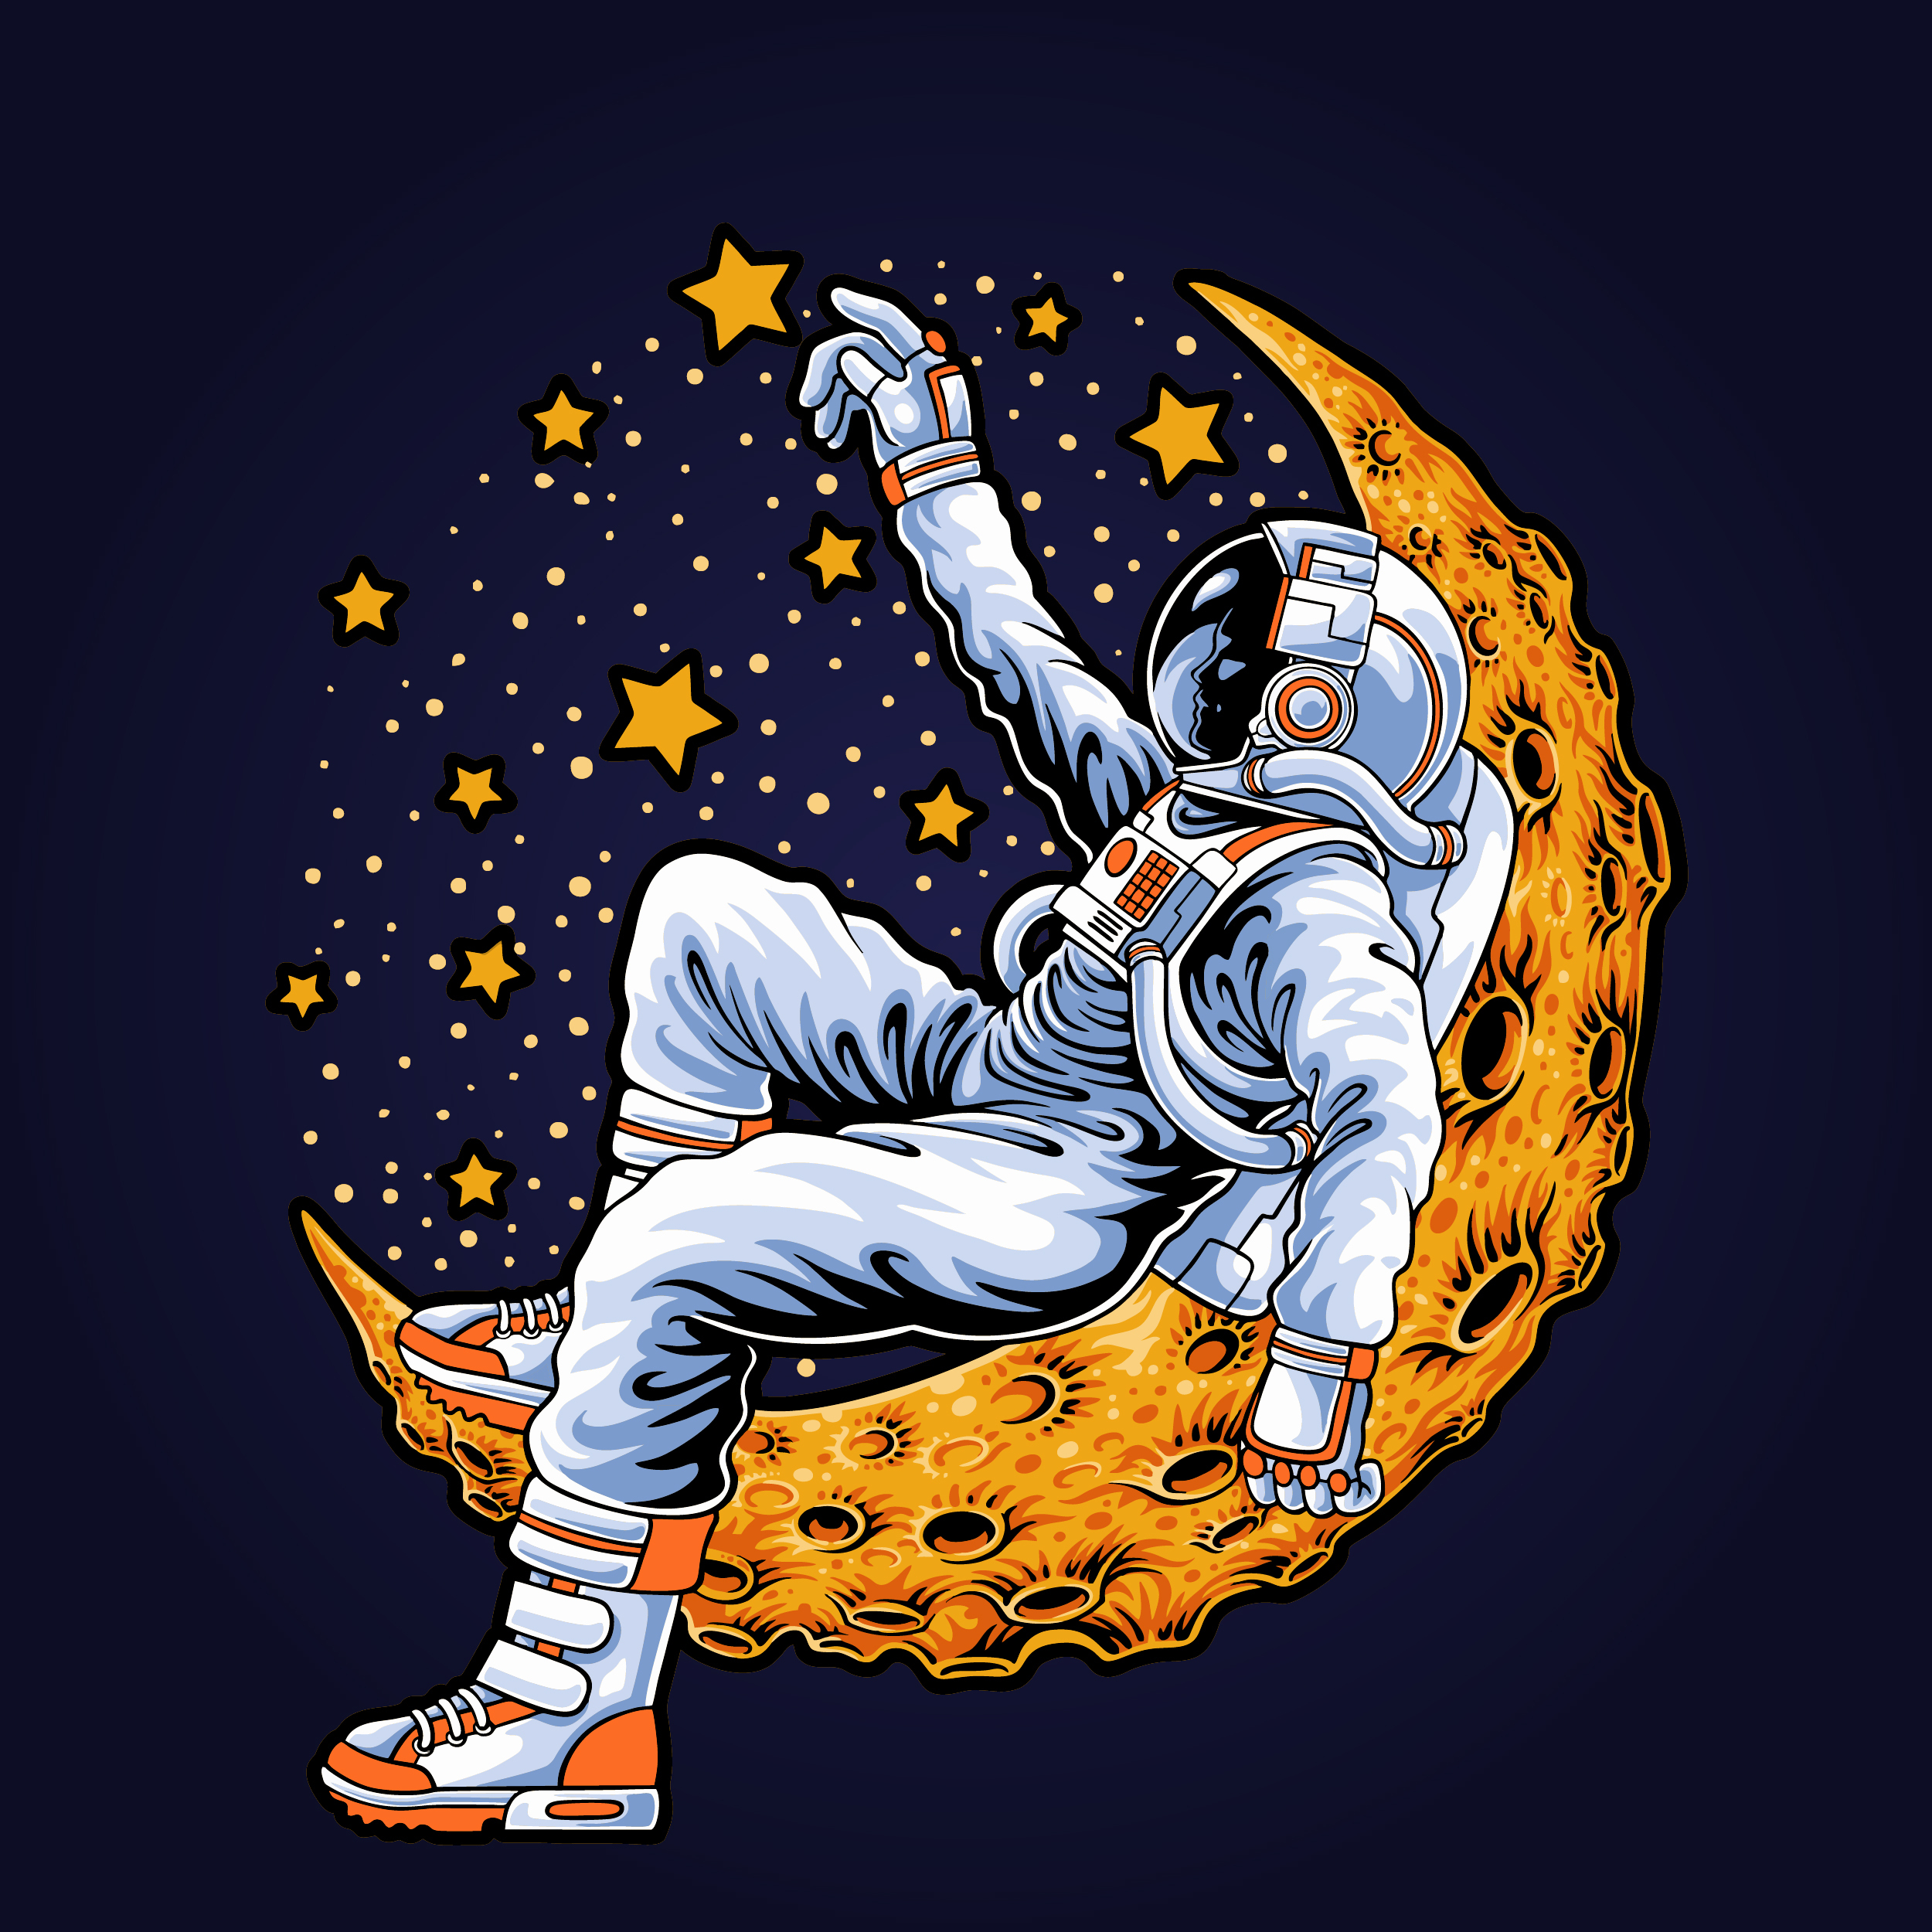 Astronaut Lying On The Moon - Original image